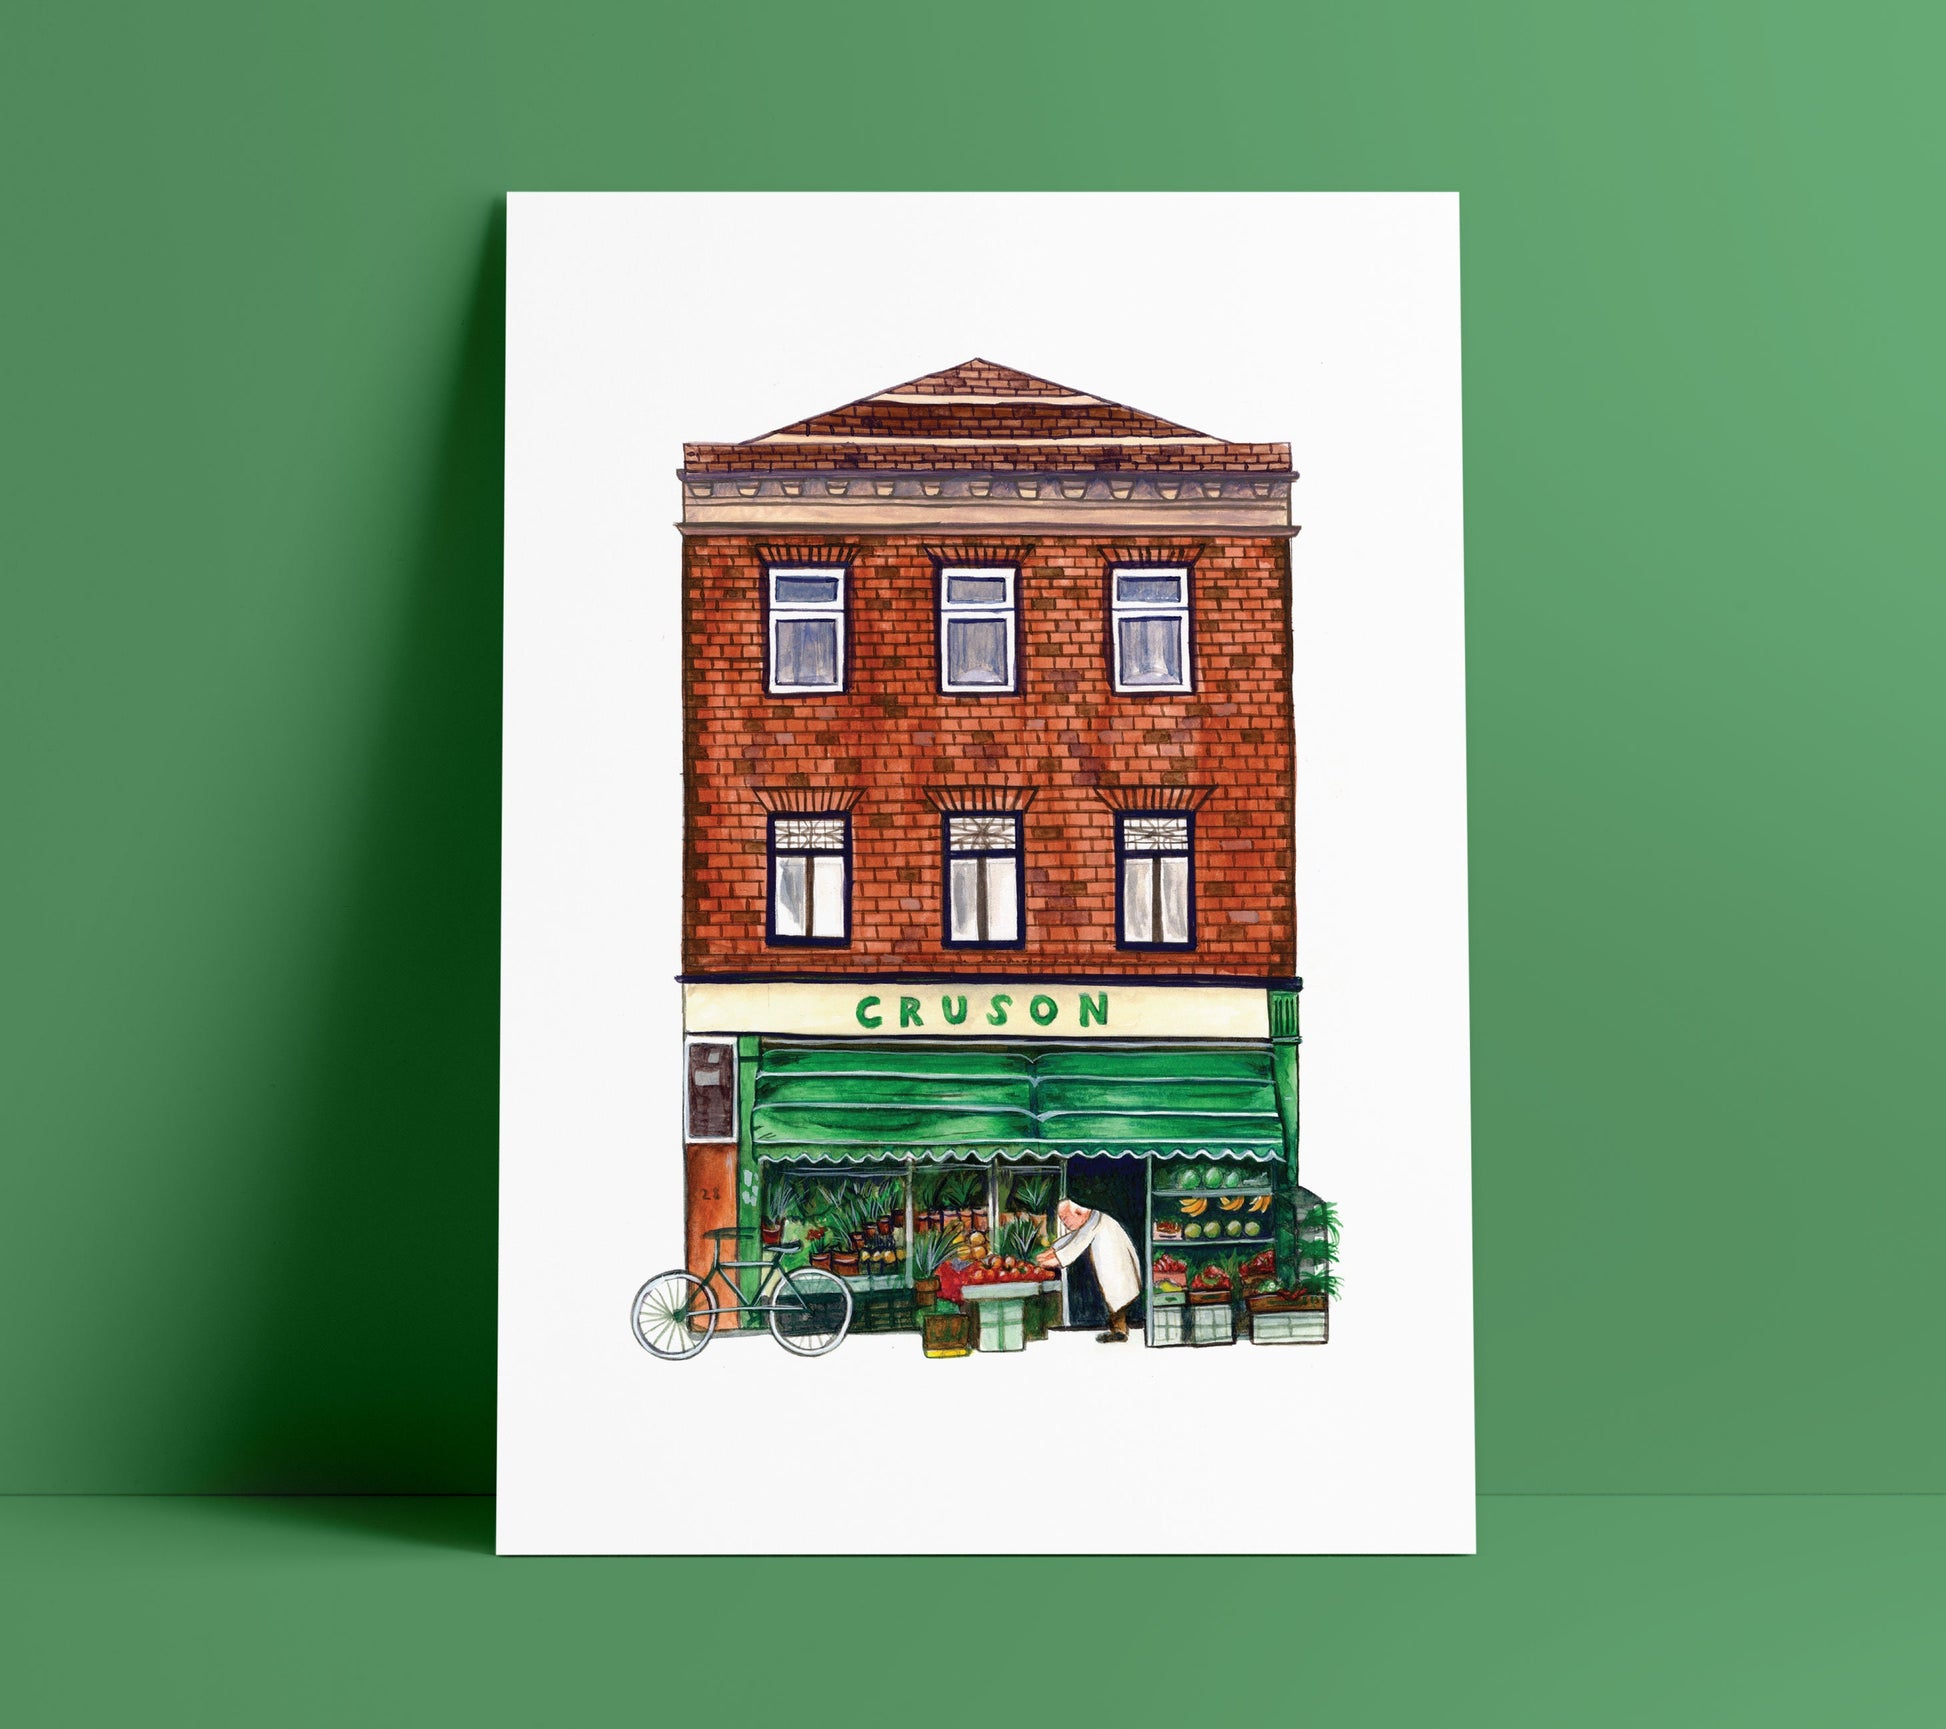 Cruson Grocery Shop Art Print, Camberwell South London